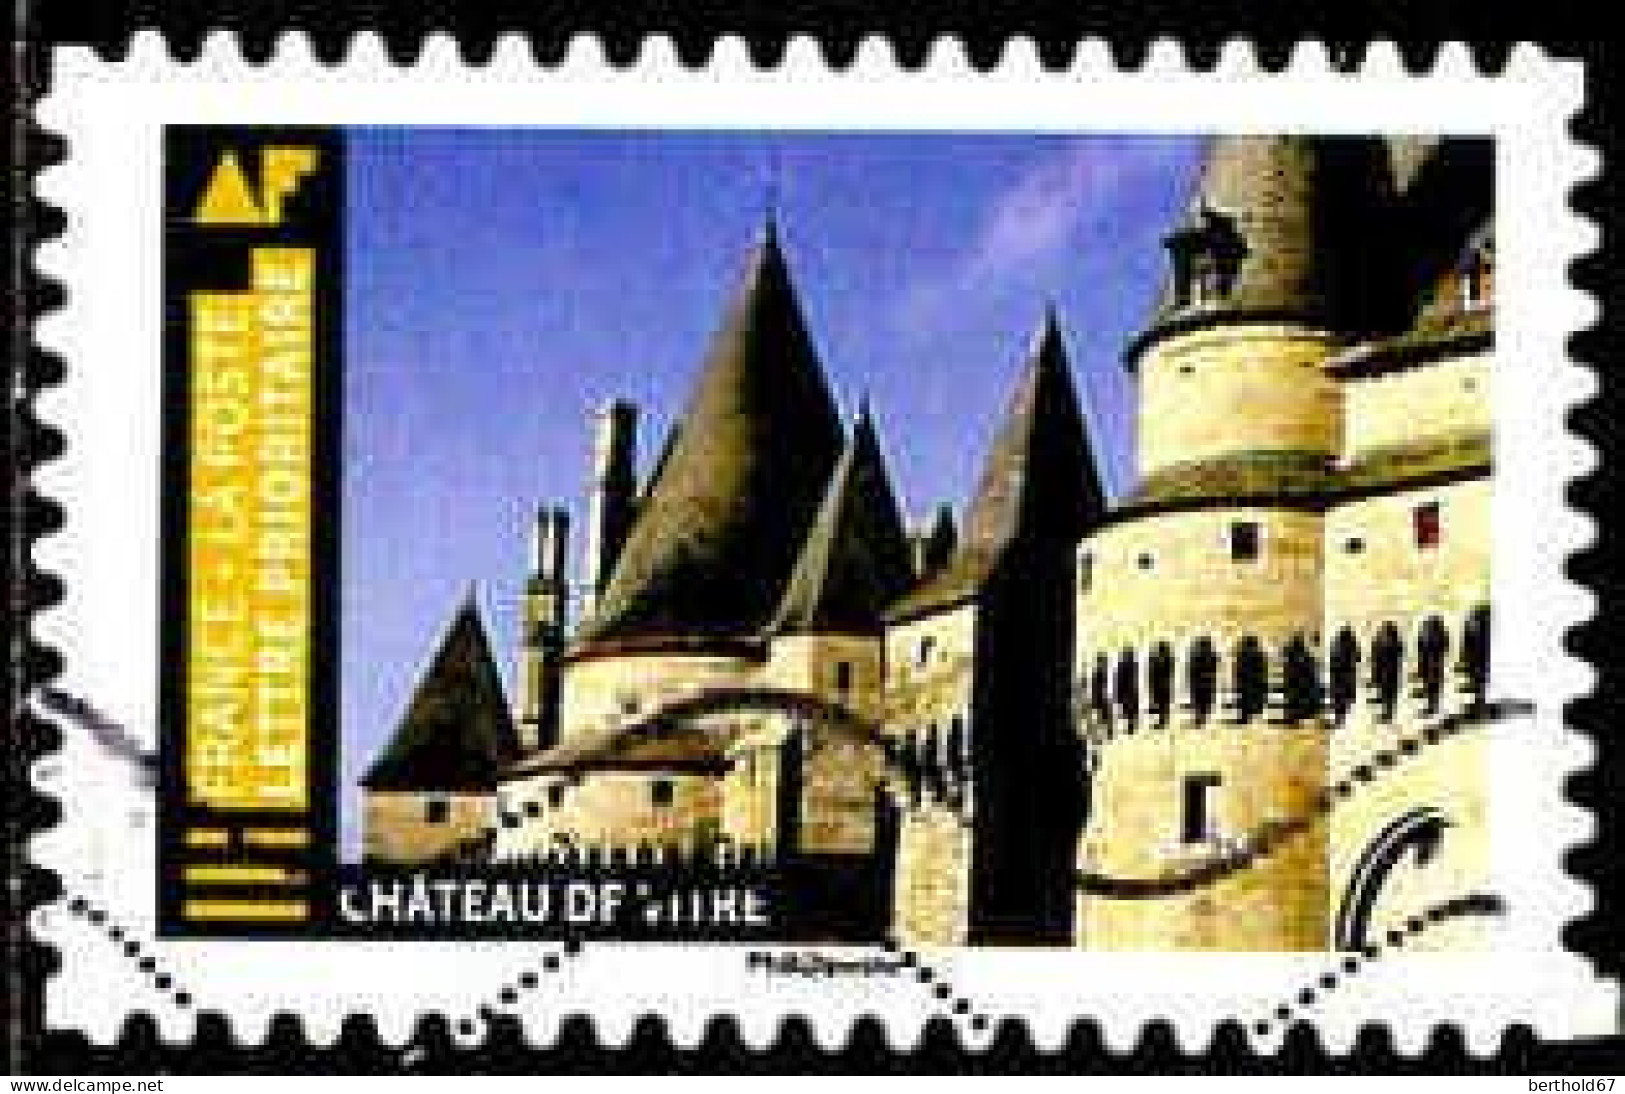 France Poste AA Obl Yv:1672 Mi:7248 Château De Vitré (Lign.Ondulées) - Used Stamps